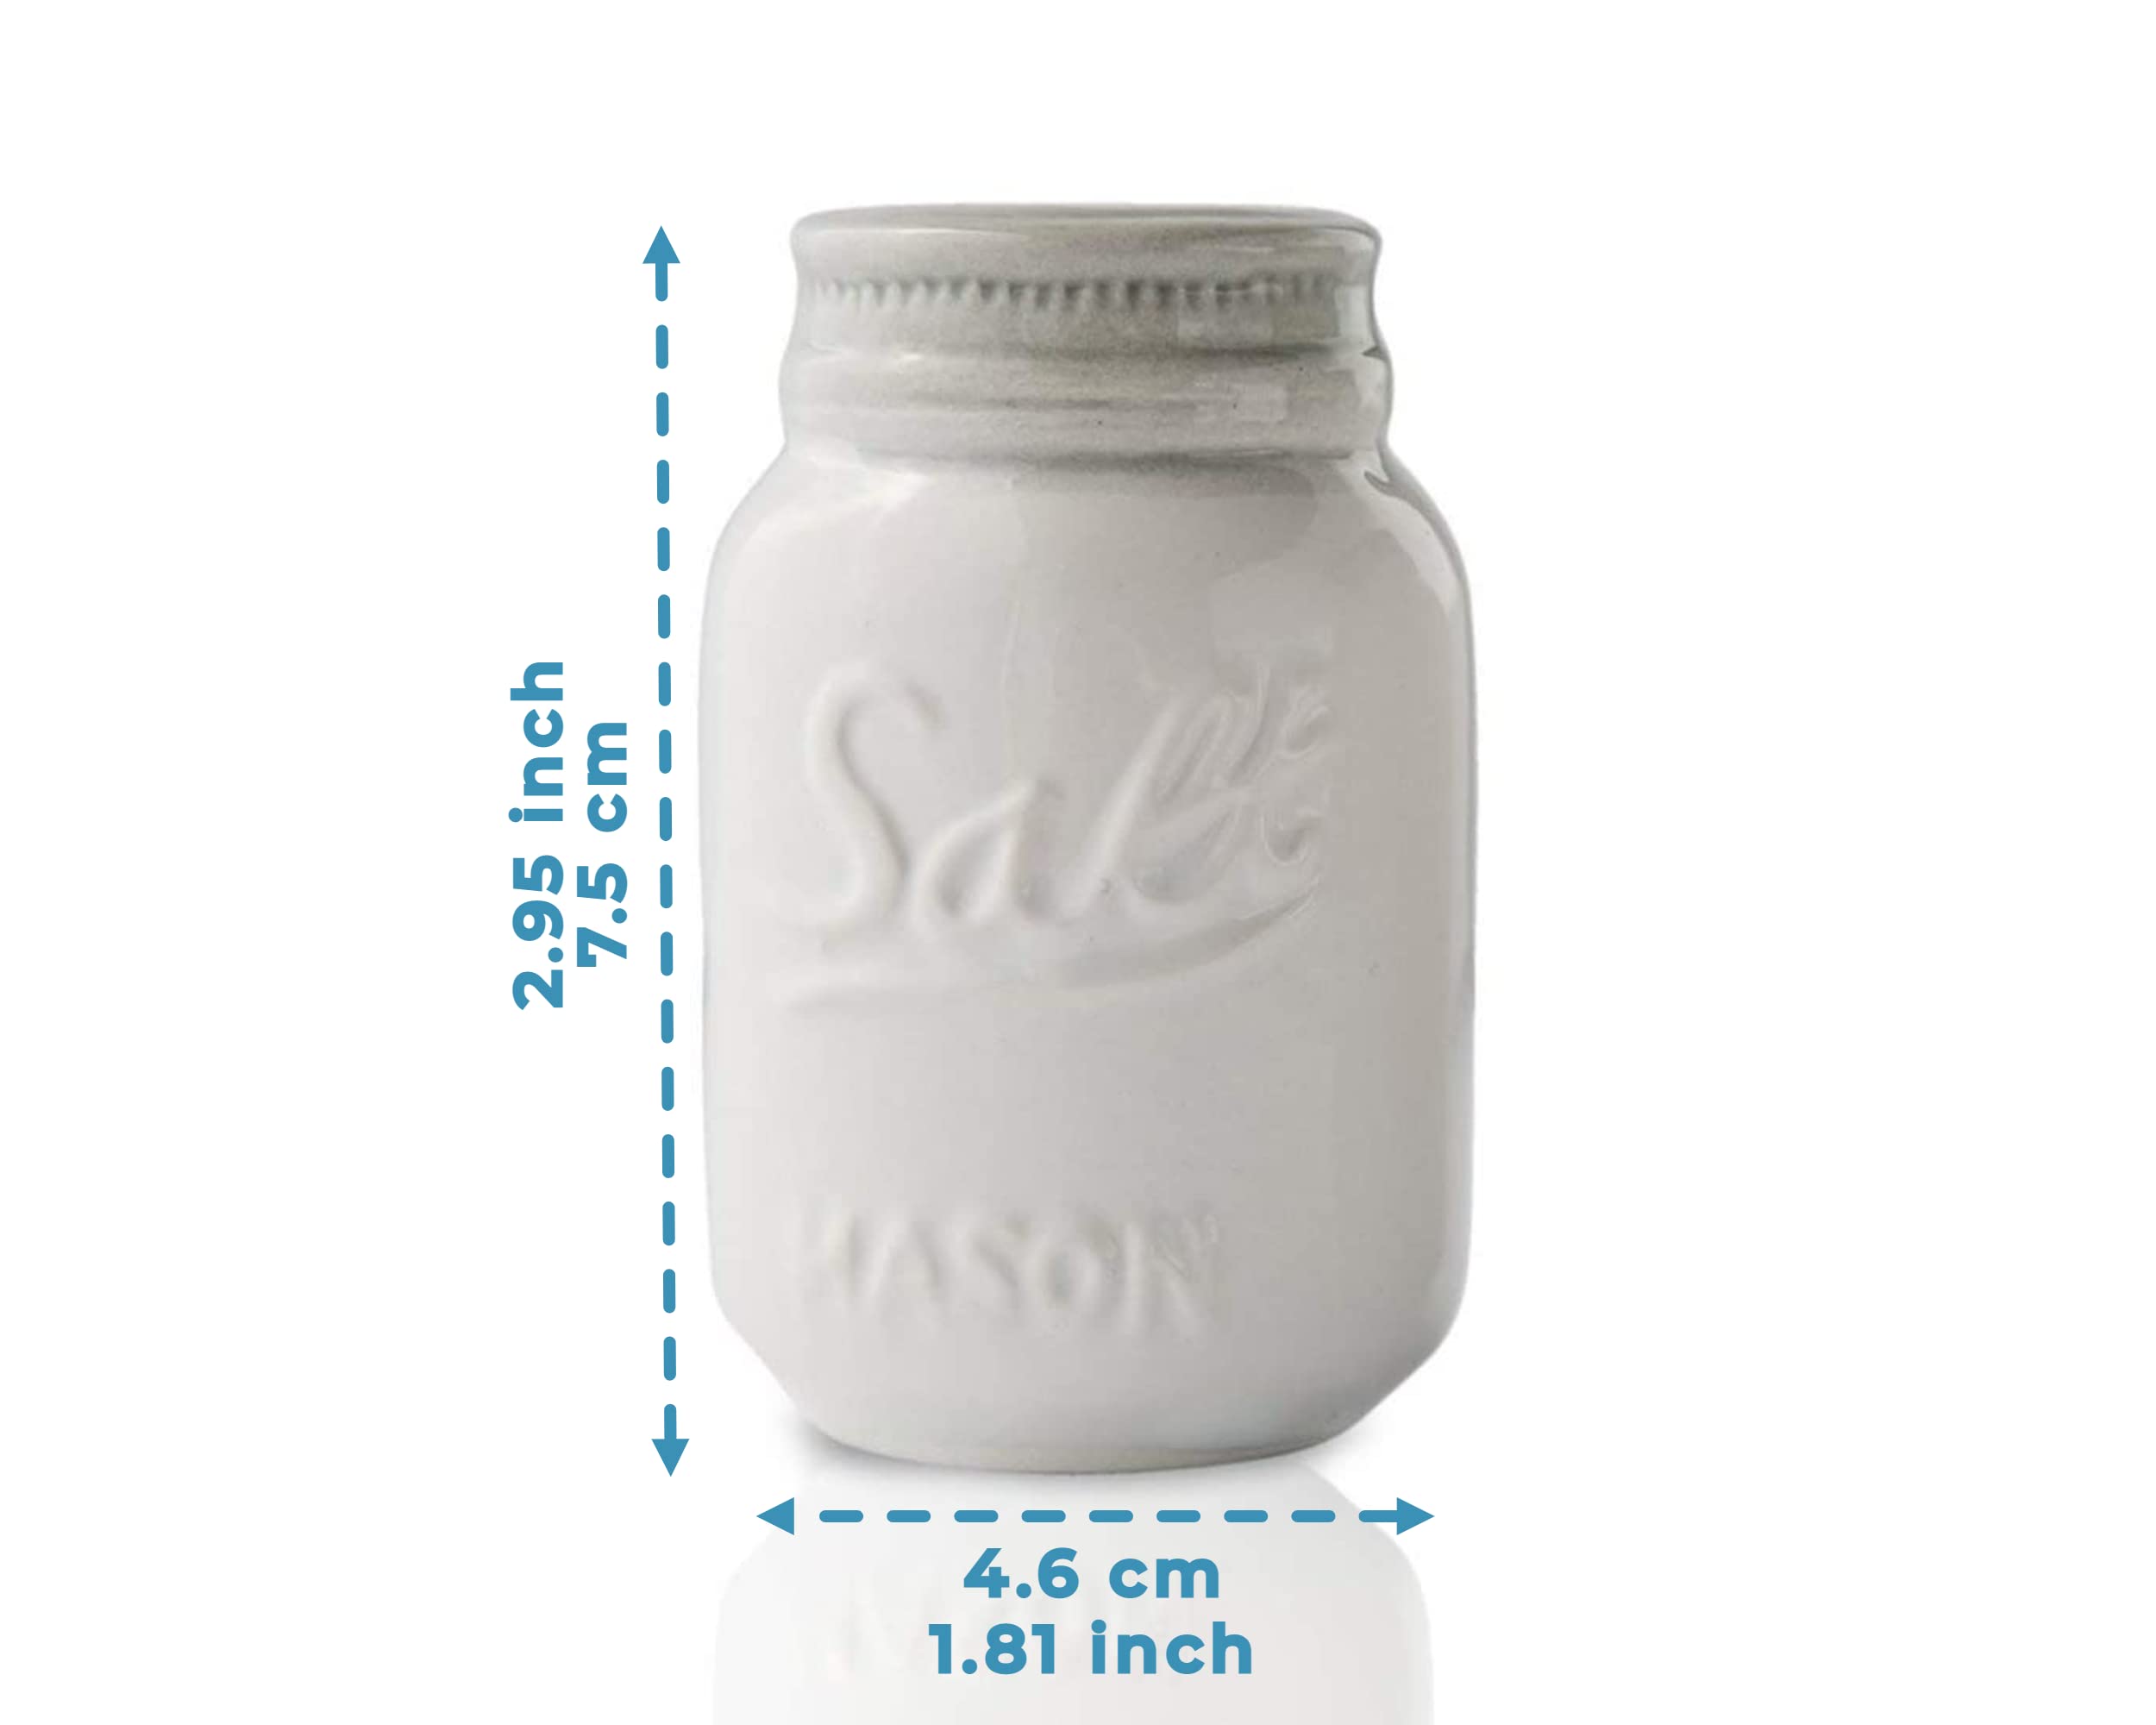 Vintage Mason Jar Salt & Pepper Shakers by Comfify - Adorable Decorative Mason Jar Décor for Vintage, Rustic, Shabby Chic Kitchens - Sturdy Ceramic in White - 3.5 oz. Cap.